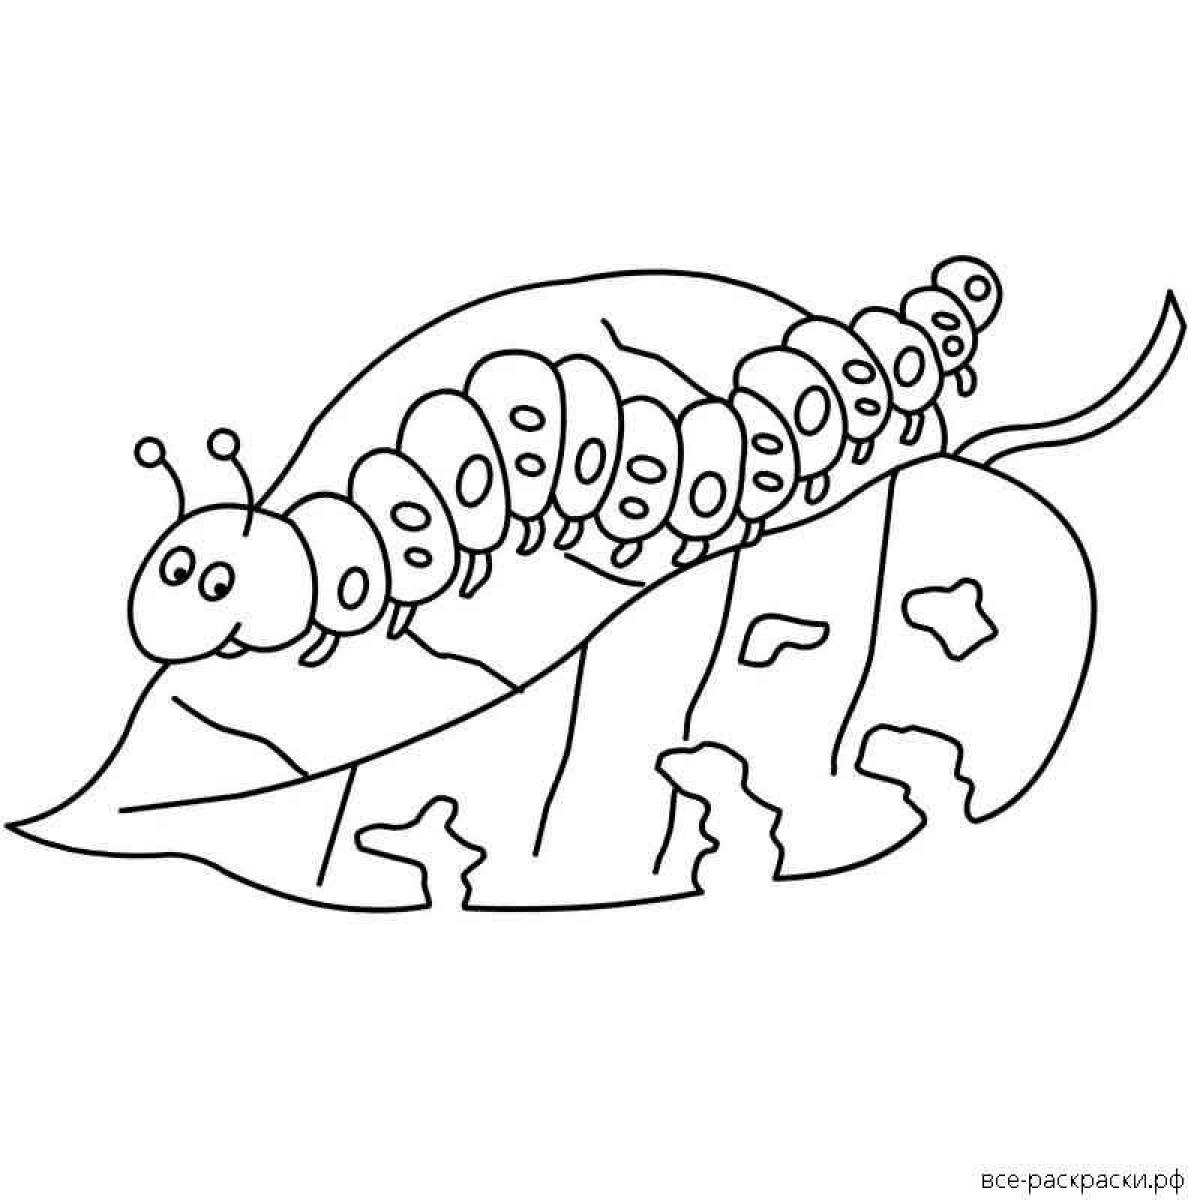 Coloring caterpillar for preschoolers